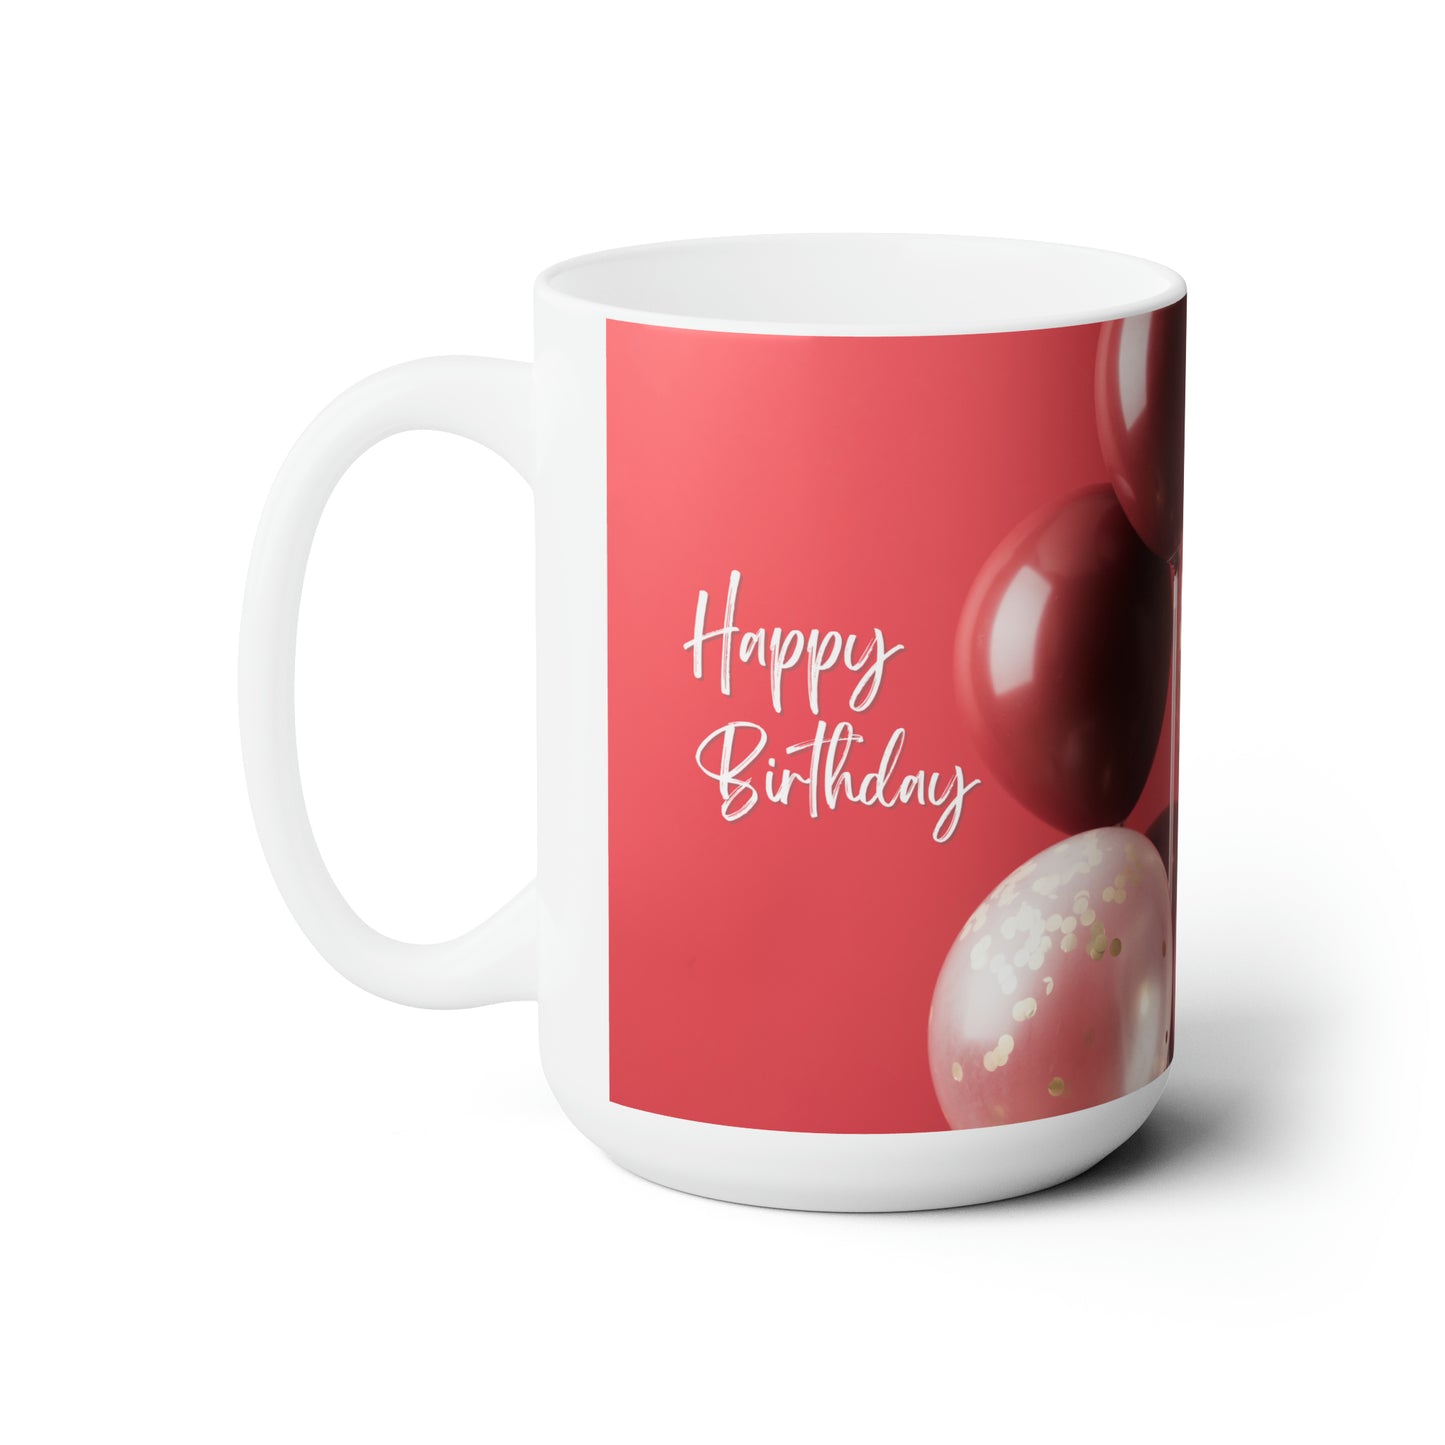 Happy Birthday Ceramic Mugs 15 oz, Red